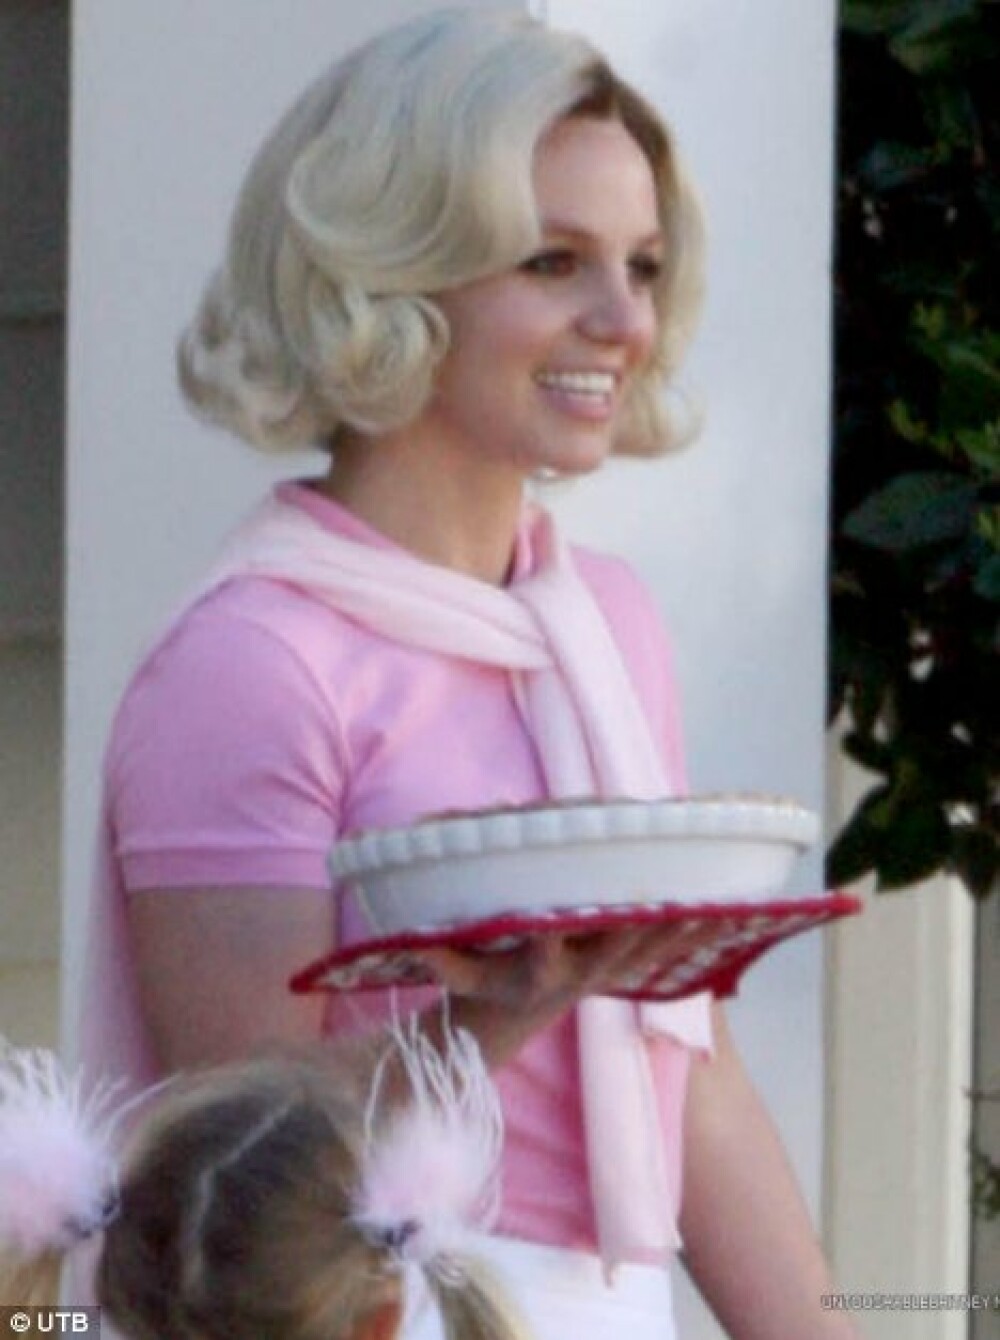 Barbat nou, coafura noua: Britney Spears s-a vopsit! - Imaginea 8